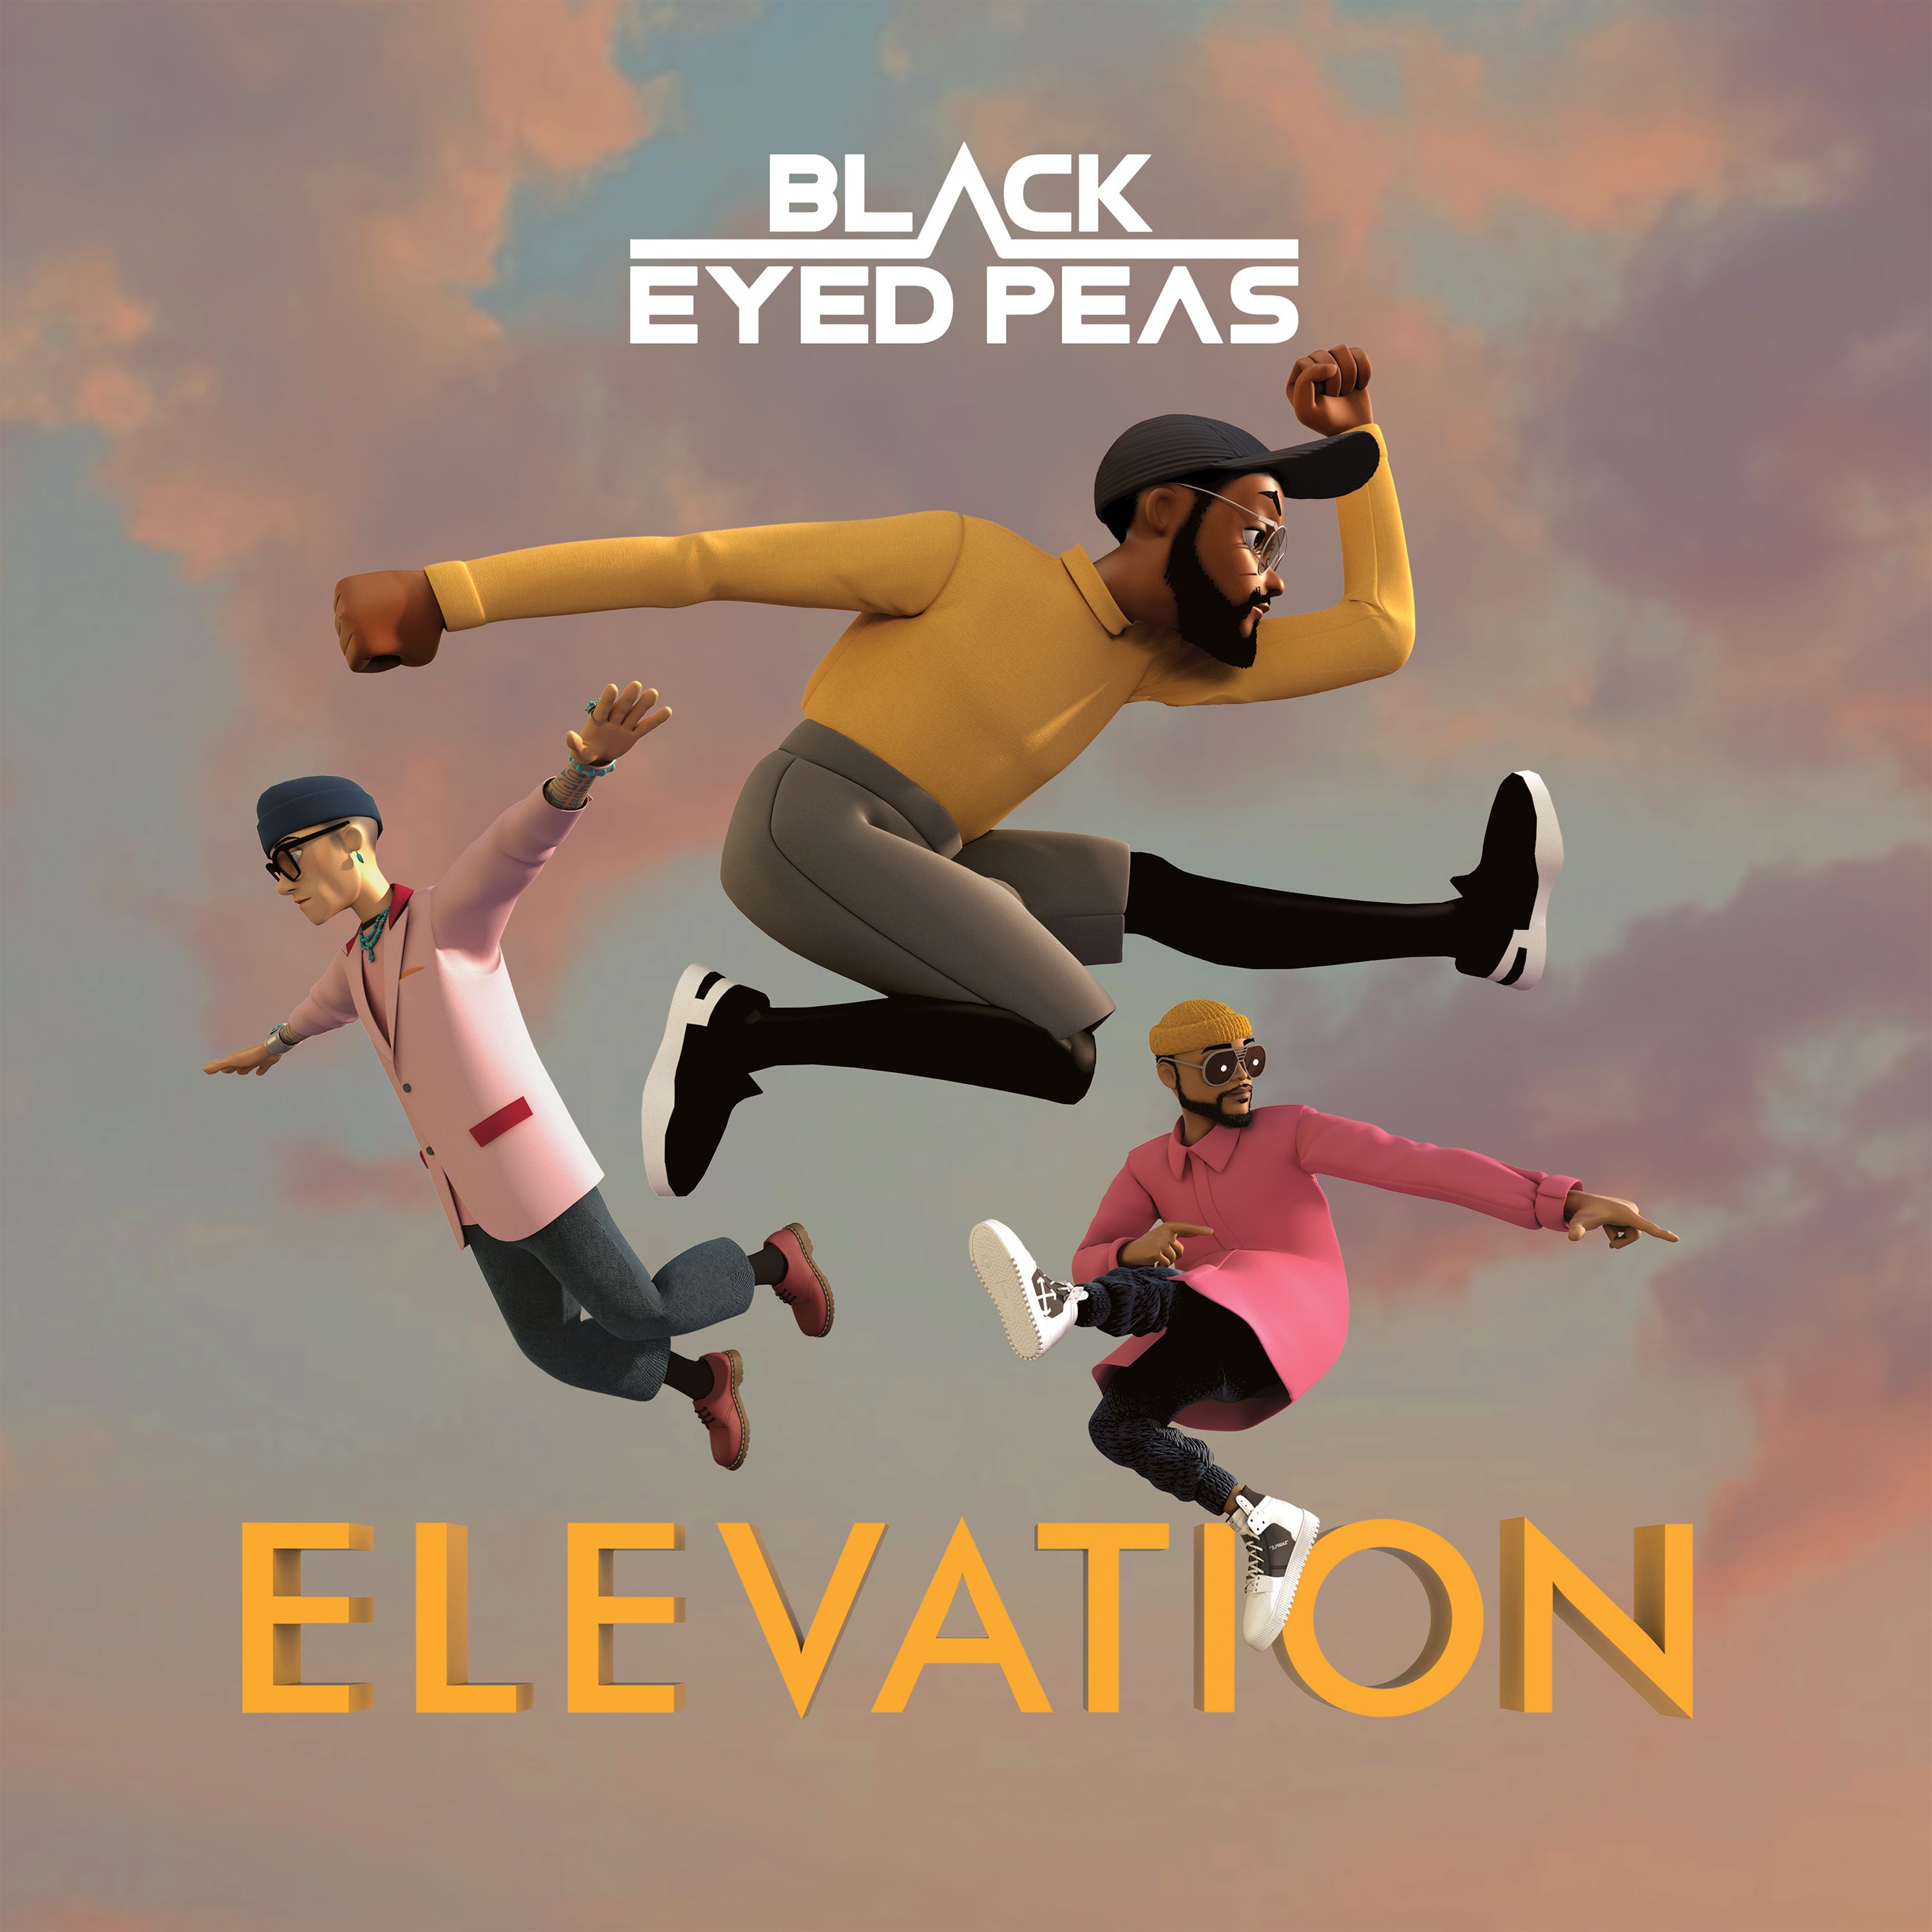 The Black Eyed Peas - Bailar contigo